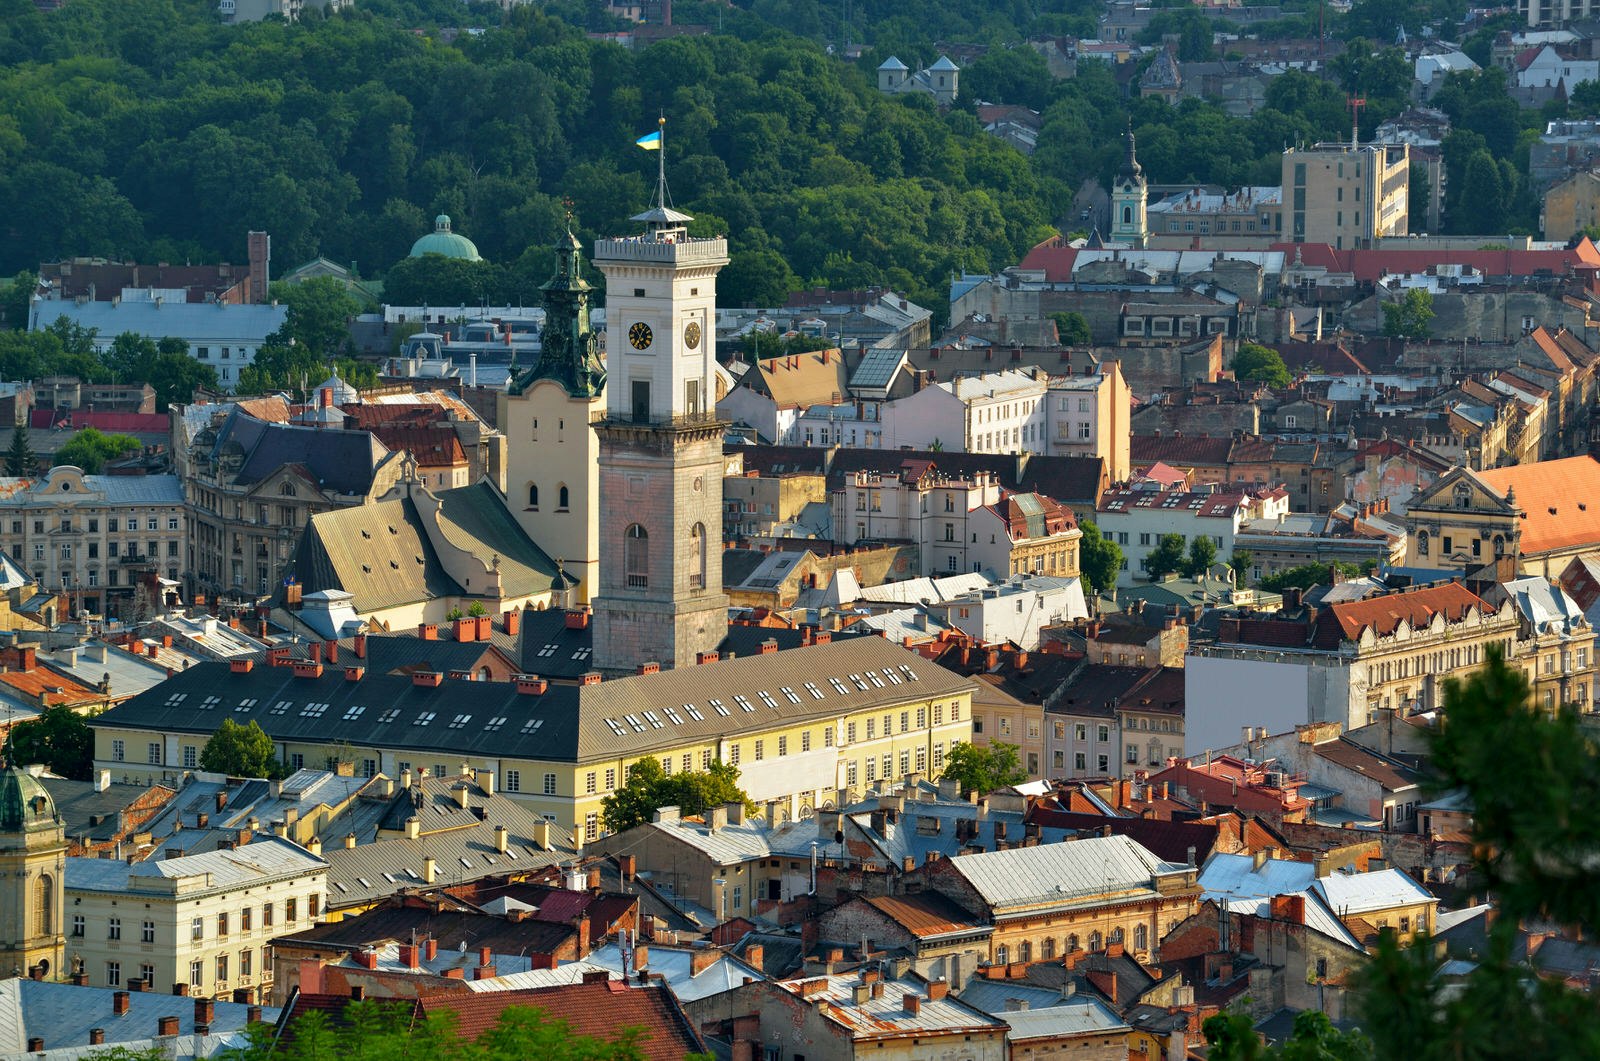 Lviv's City Hall tower on the main square of Ploshcha Rynok © Artur Synenko / Shutterstock